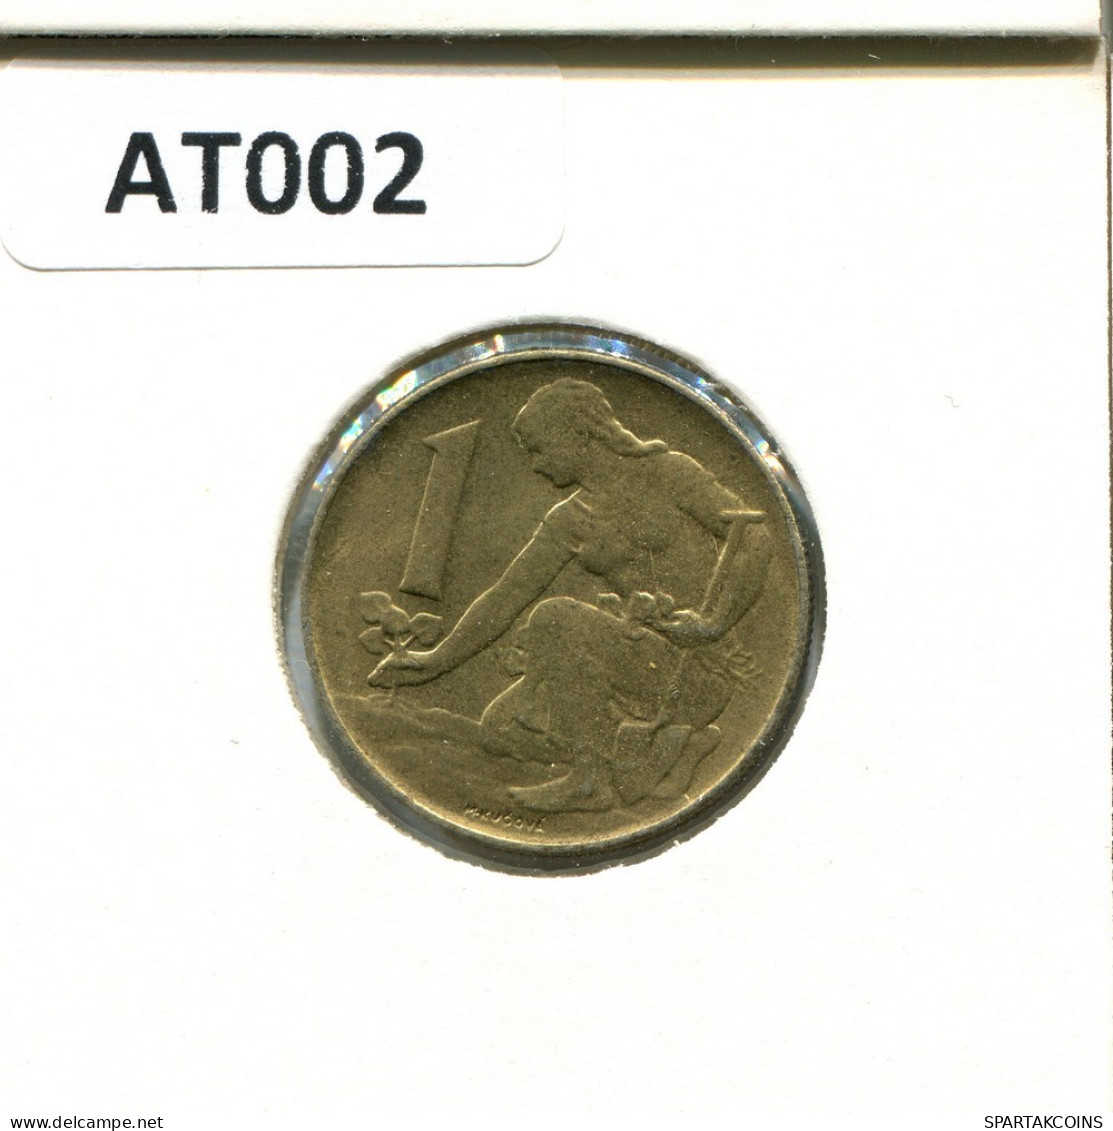 1 KORUNA 1992 CZECHOSLOVAKIA Coin #AT002.U.A - Tschechoslowakei